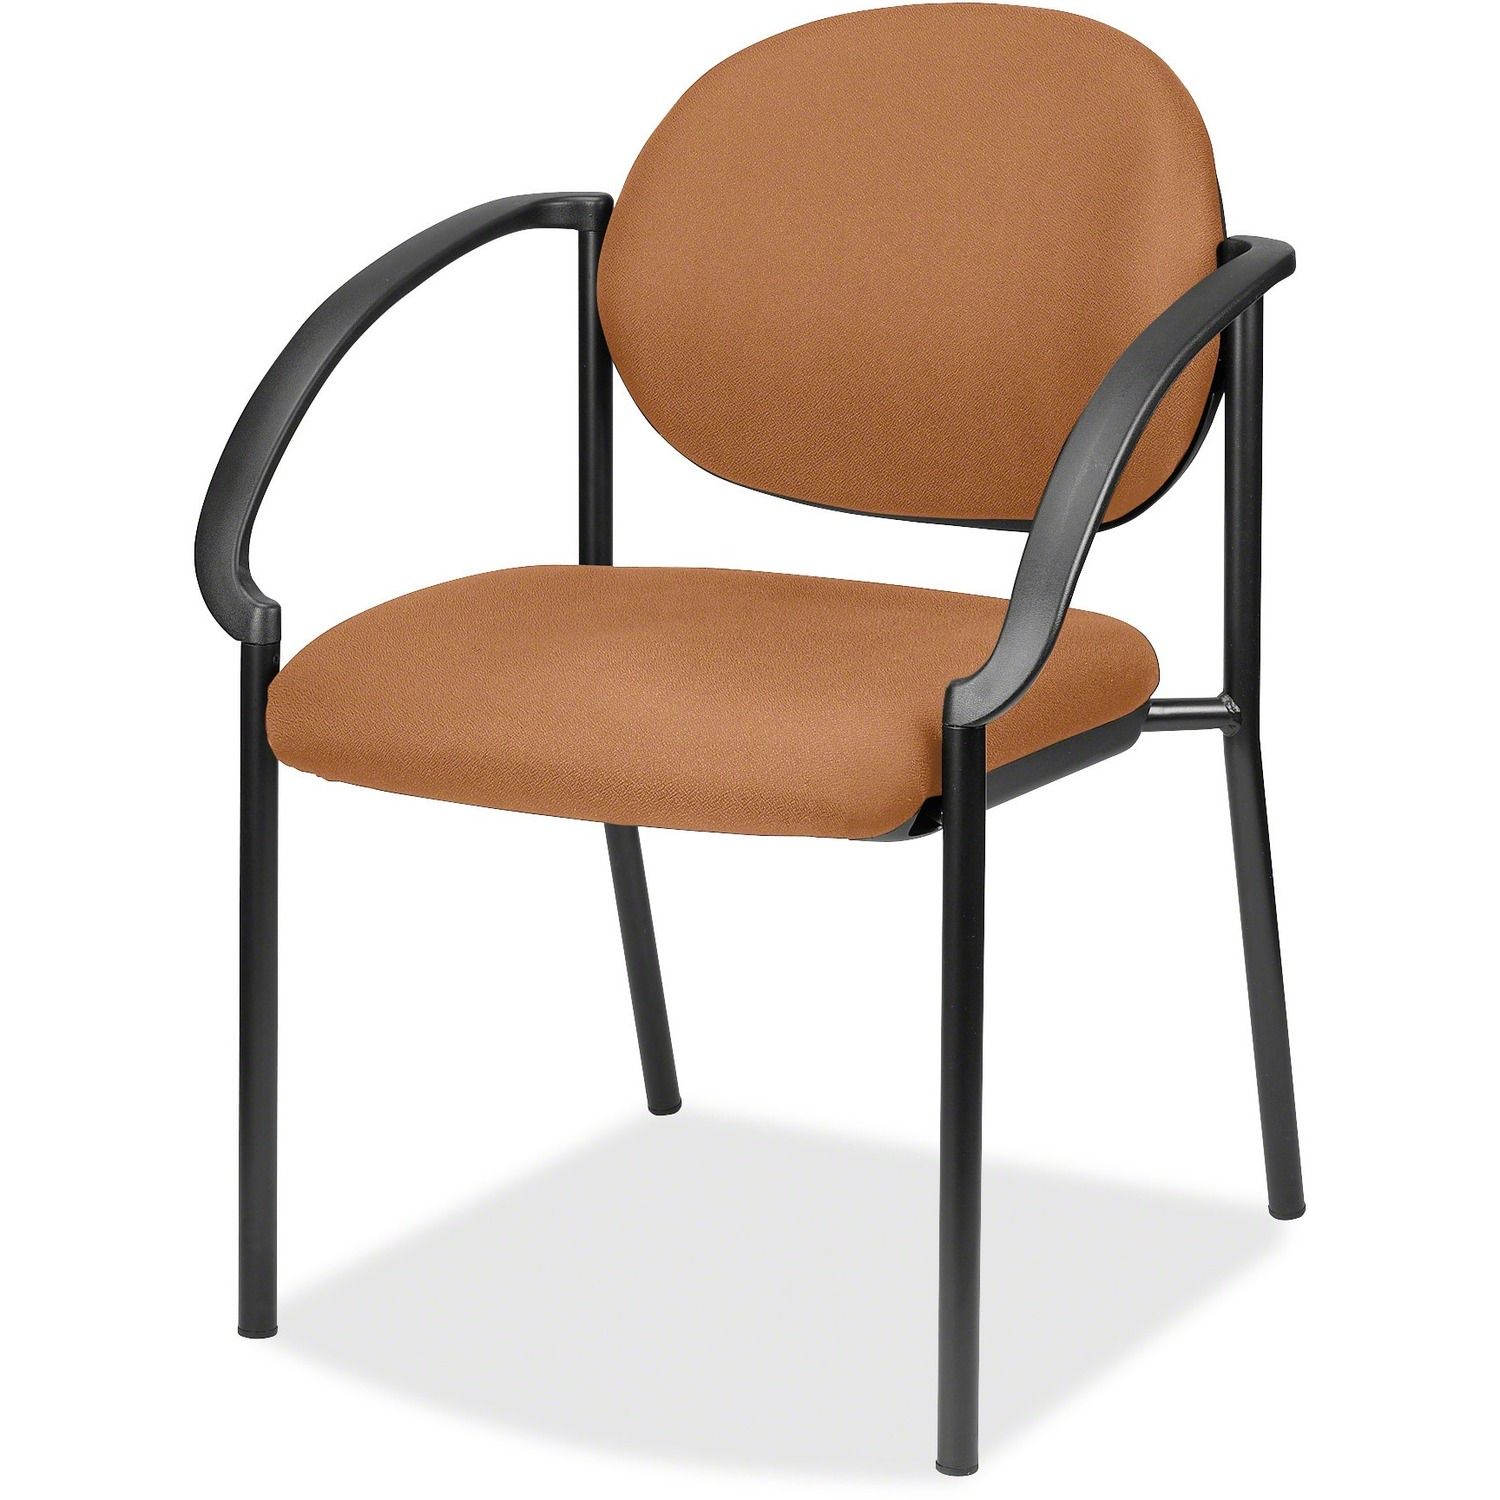 Dakota 9011 Stacking Chair Sand Fabric Seat, Sand Fabric Back, Steel Frame, Four-legged Base, 1 Each